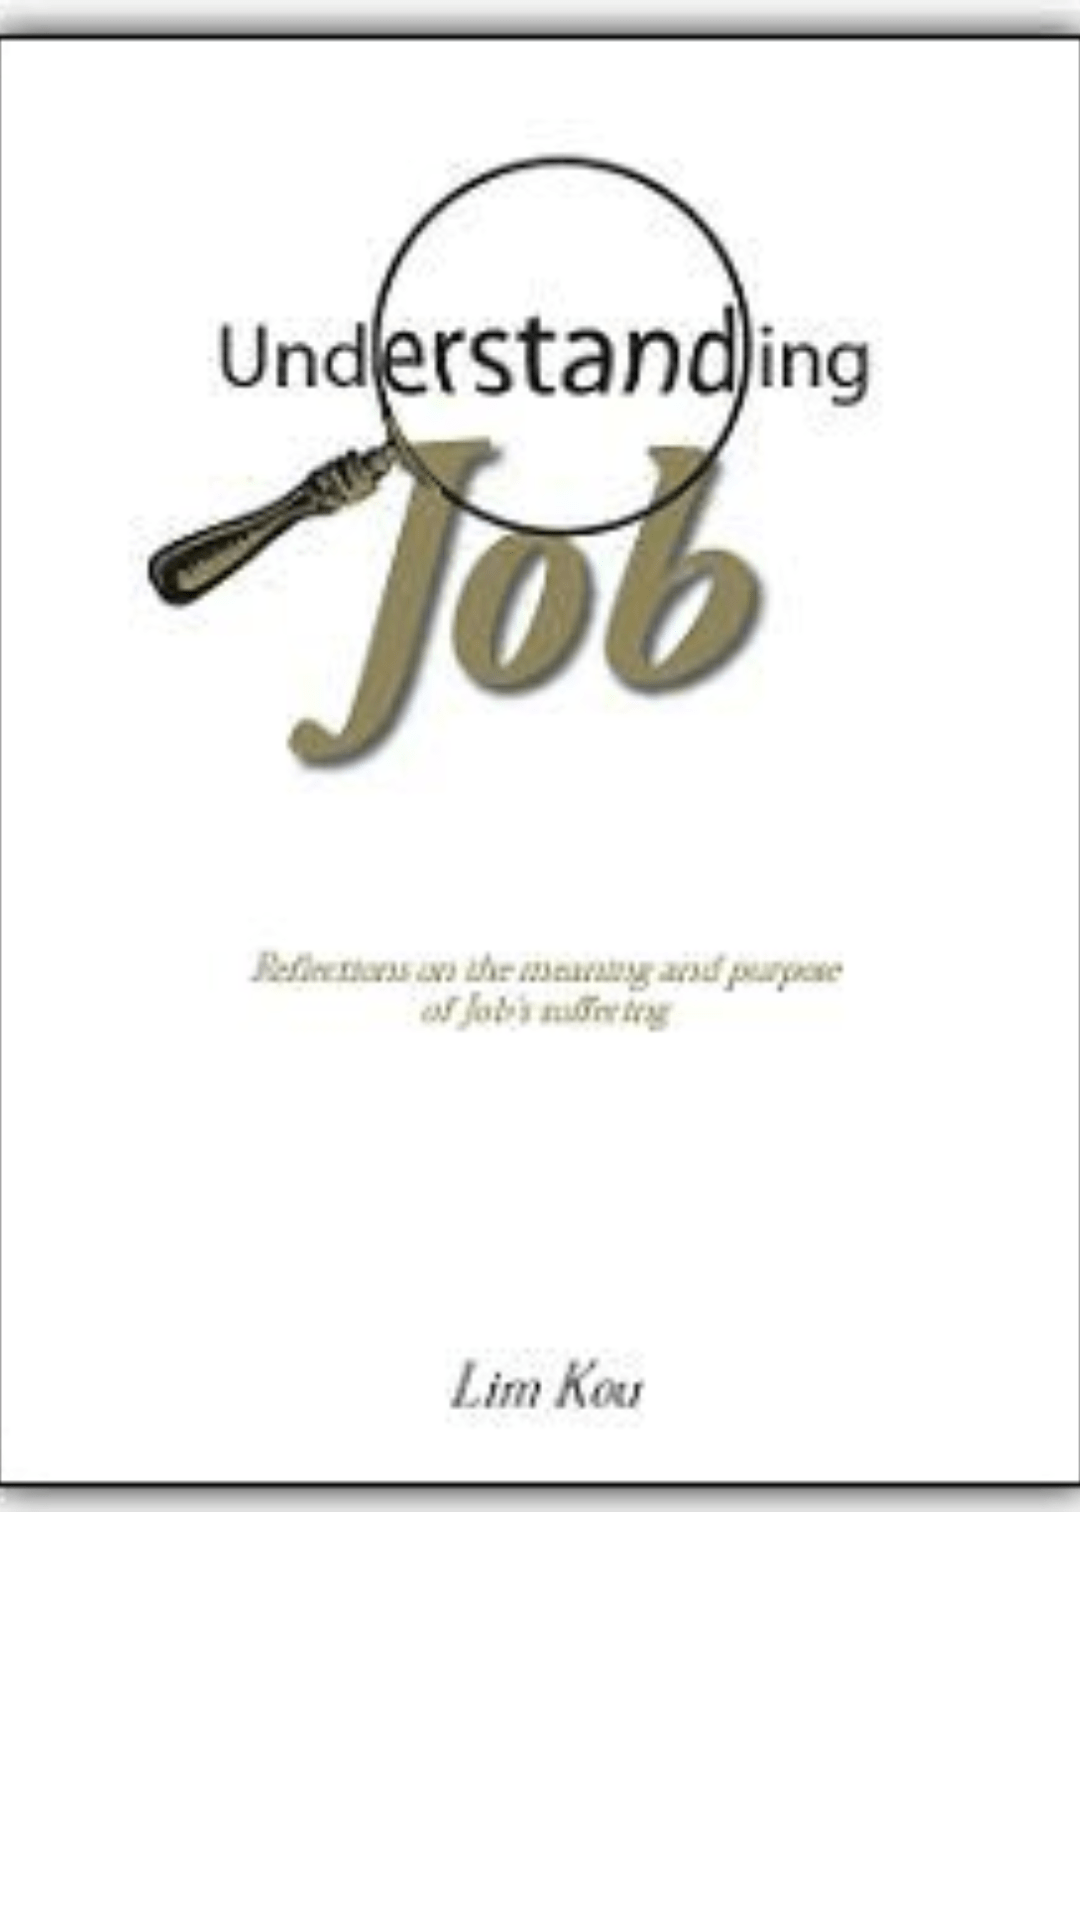 Understanding the job by Lim Kou